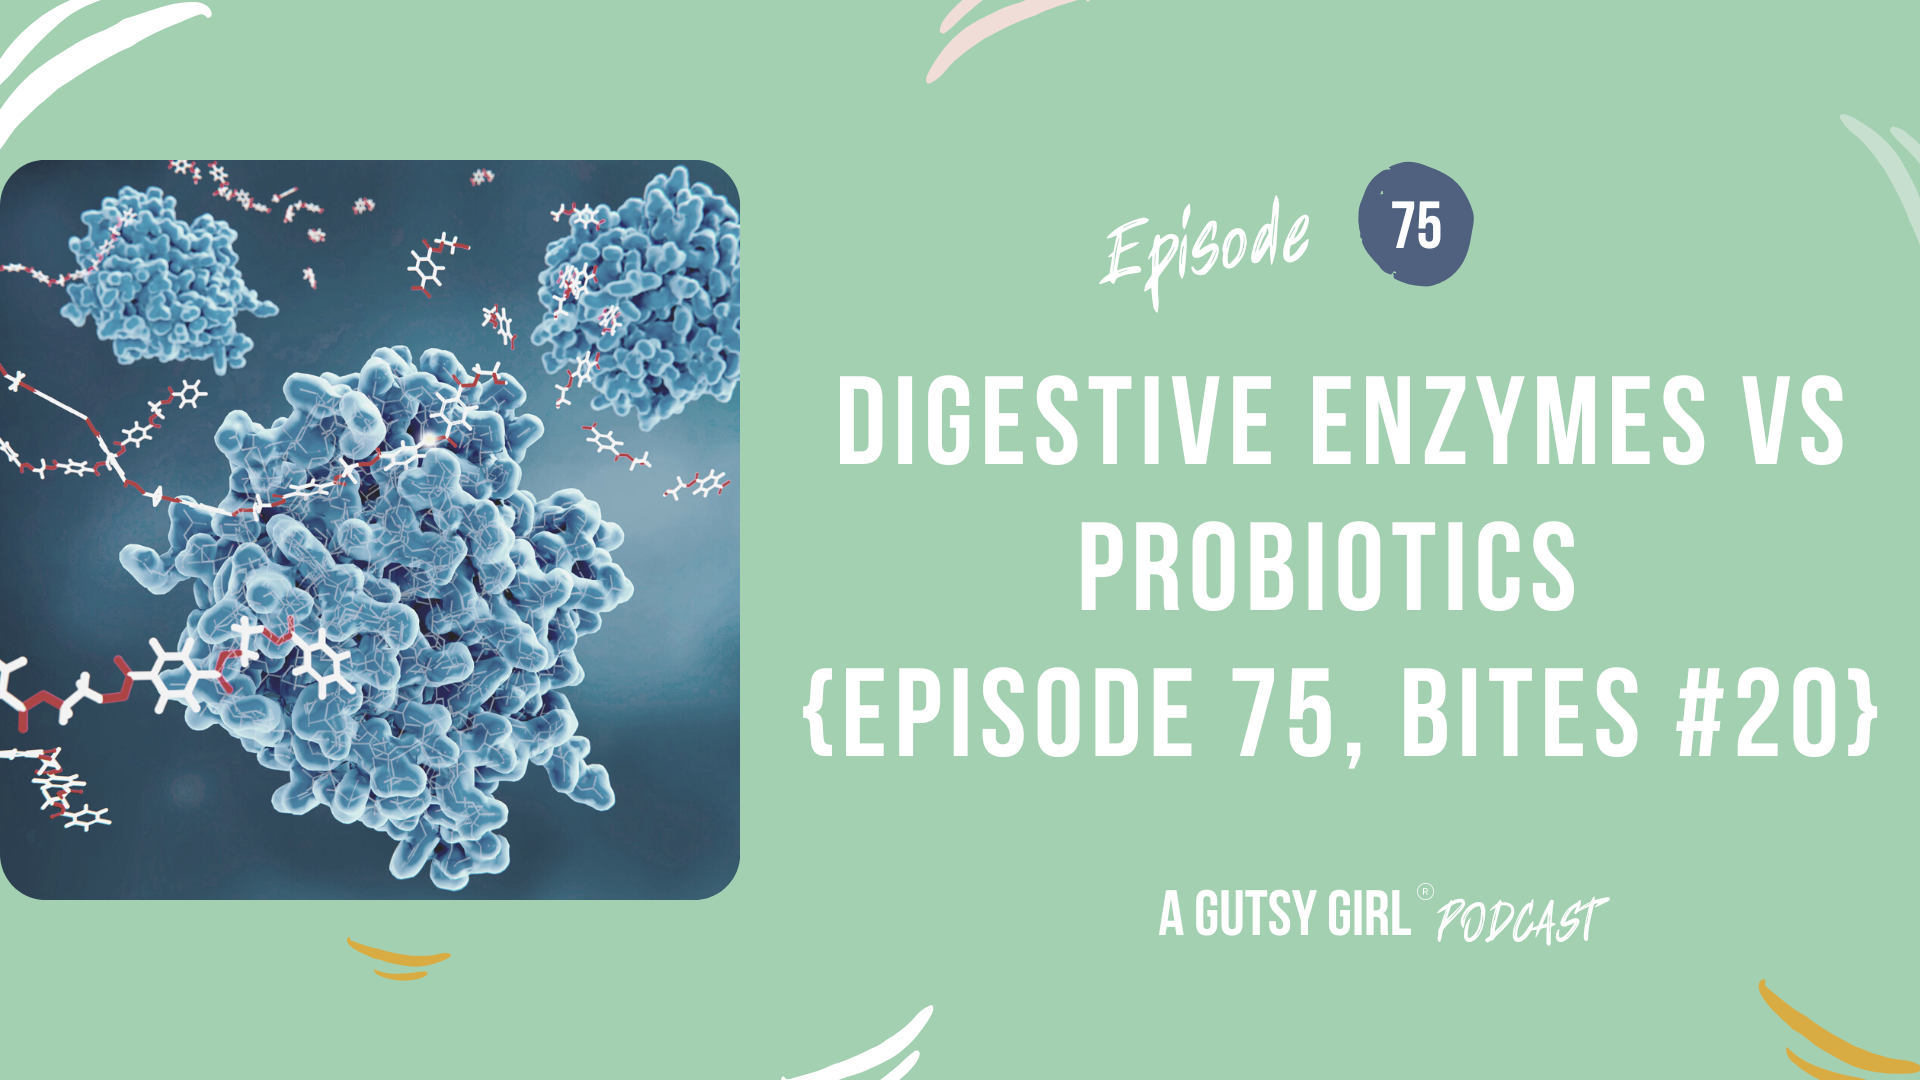 Enzyme vs Probiotic